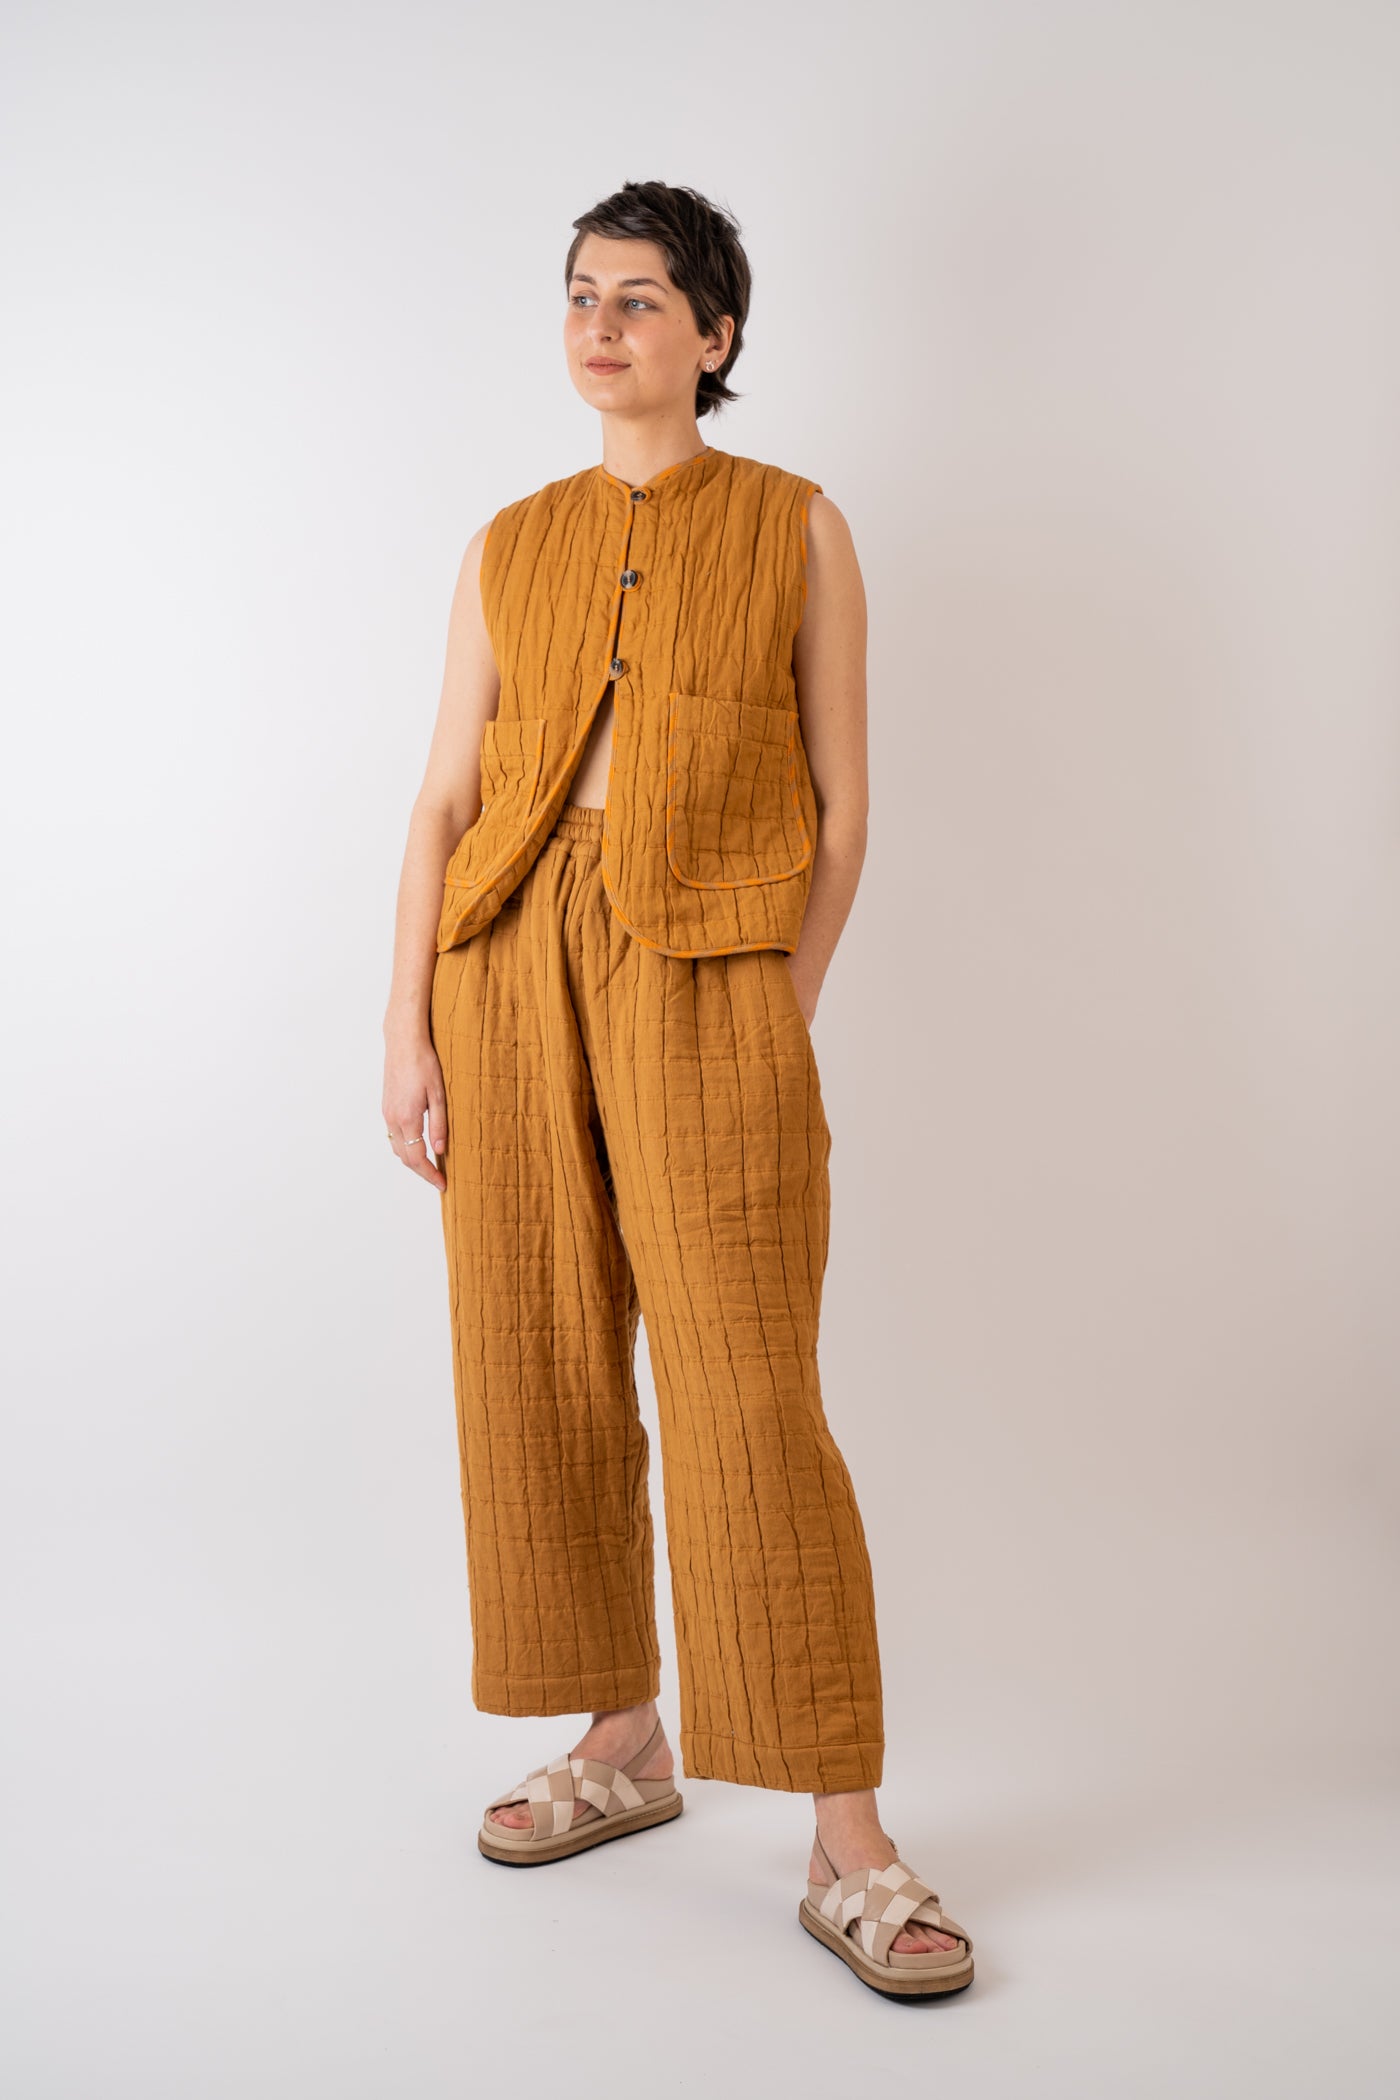 Cawley Studio Indian Jacquard Cotton and Irish Stripe Linen Ella Vest handmade in London styled with Cawley Studio Unisex Trouser in Burnt Orange